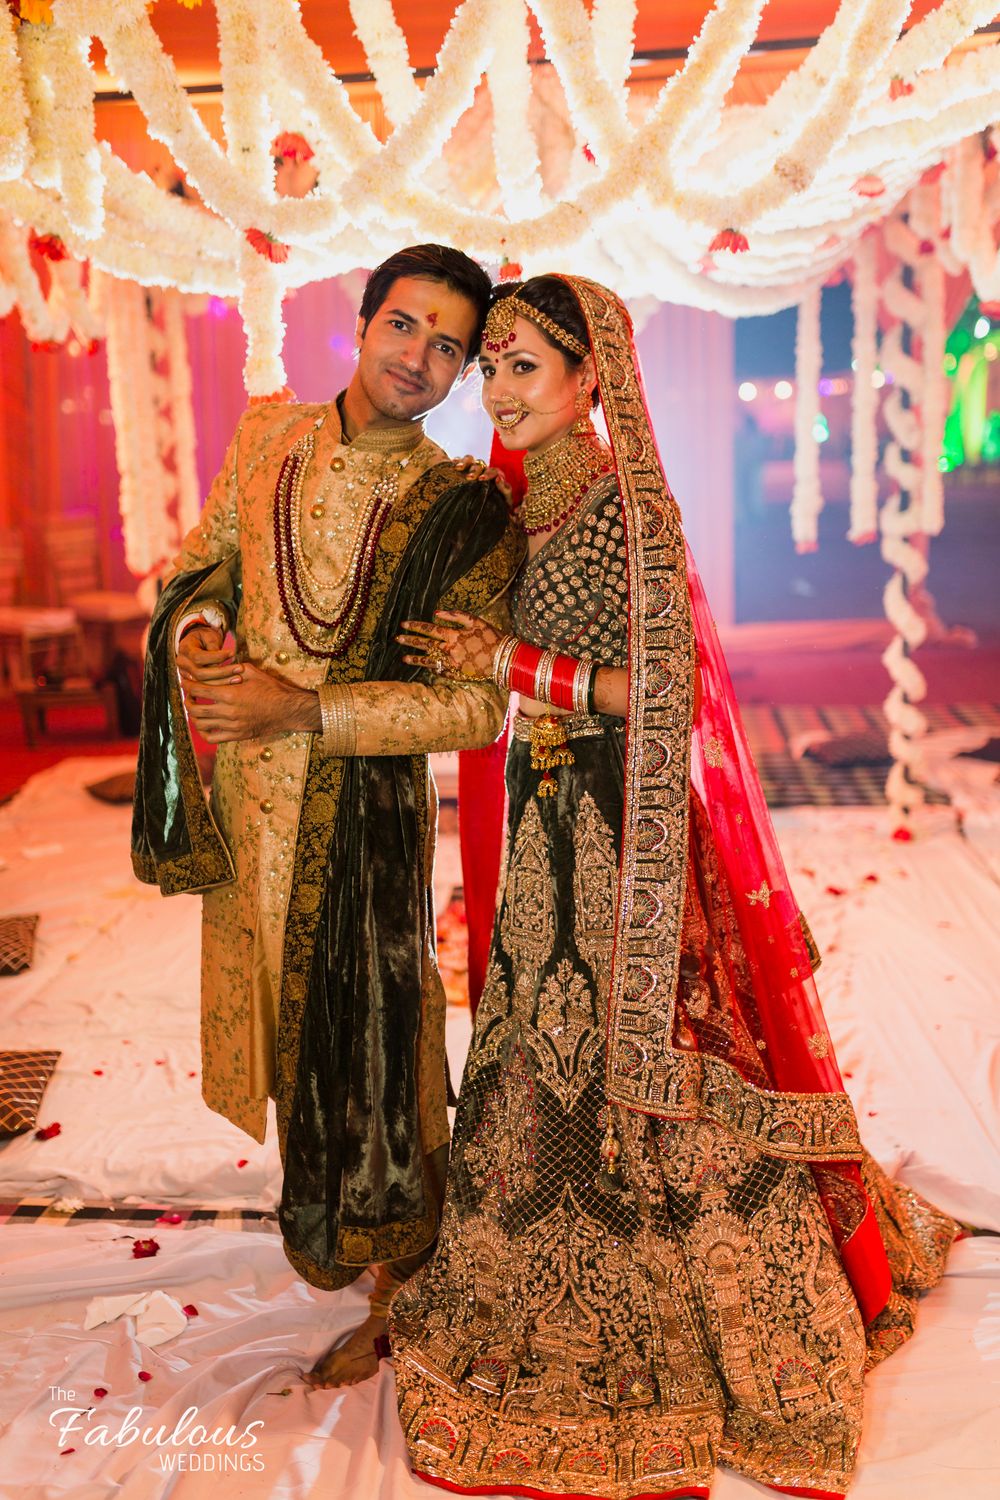 Photo From Randeep+Anshul - By The Fabulous Weddings